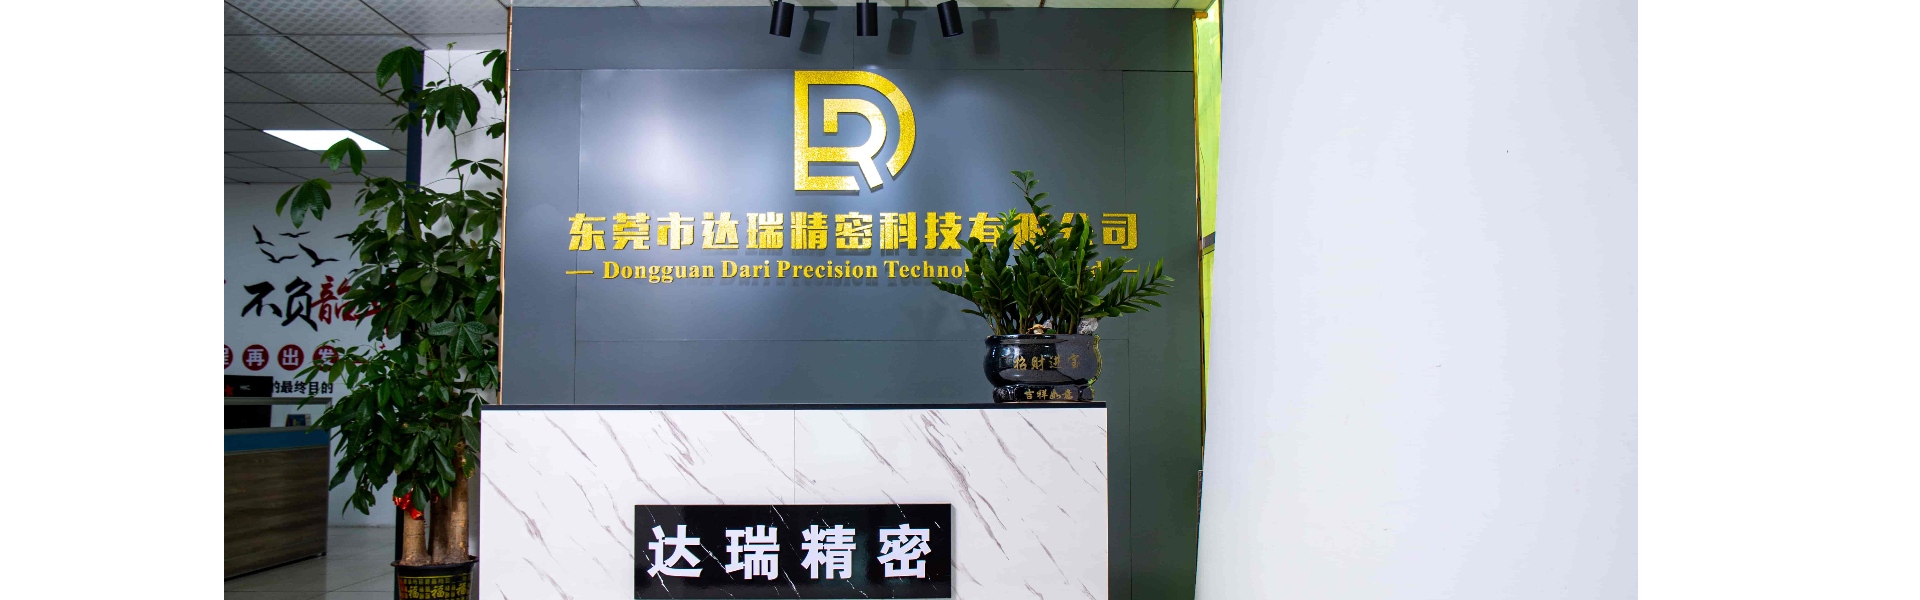 Khuônnhựa, ép phun, vỏnhựa,Dongguan Darui Precision Technology Co., Ltd.